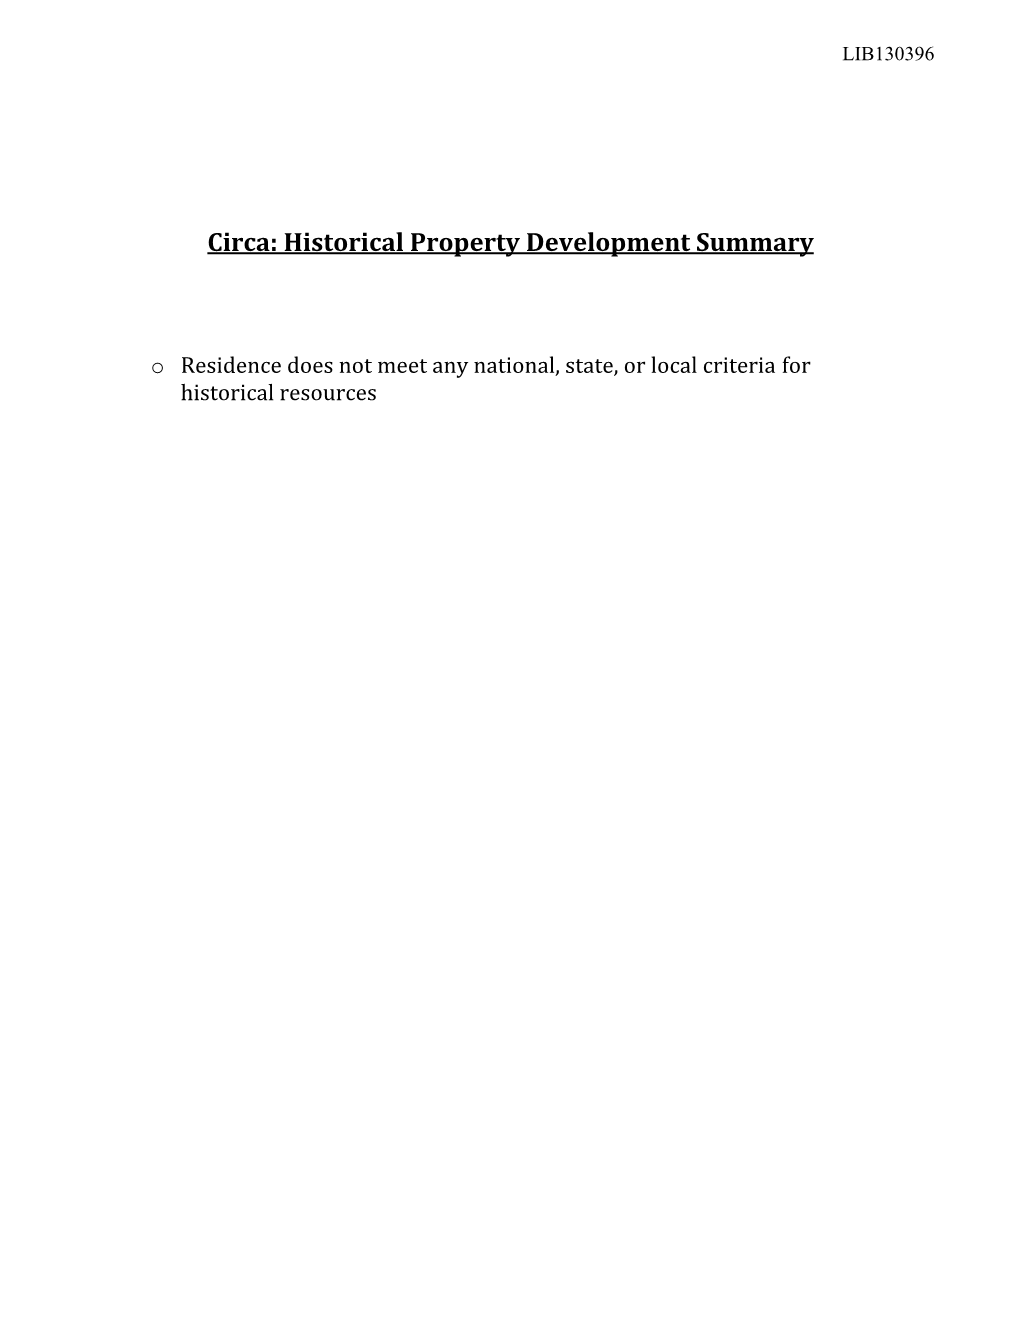 Historical Property Development Summary